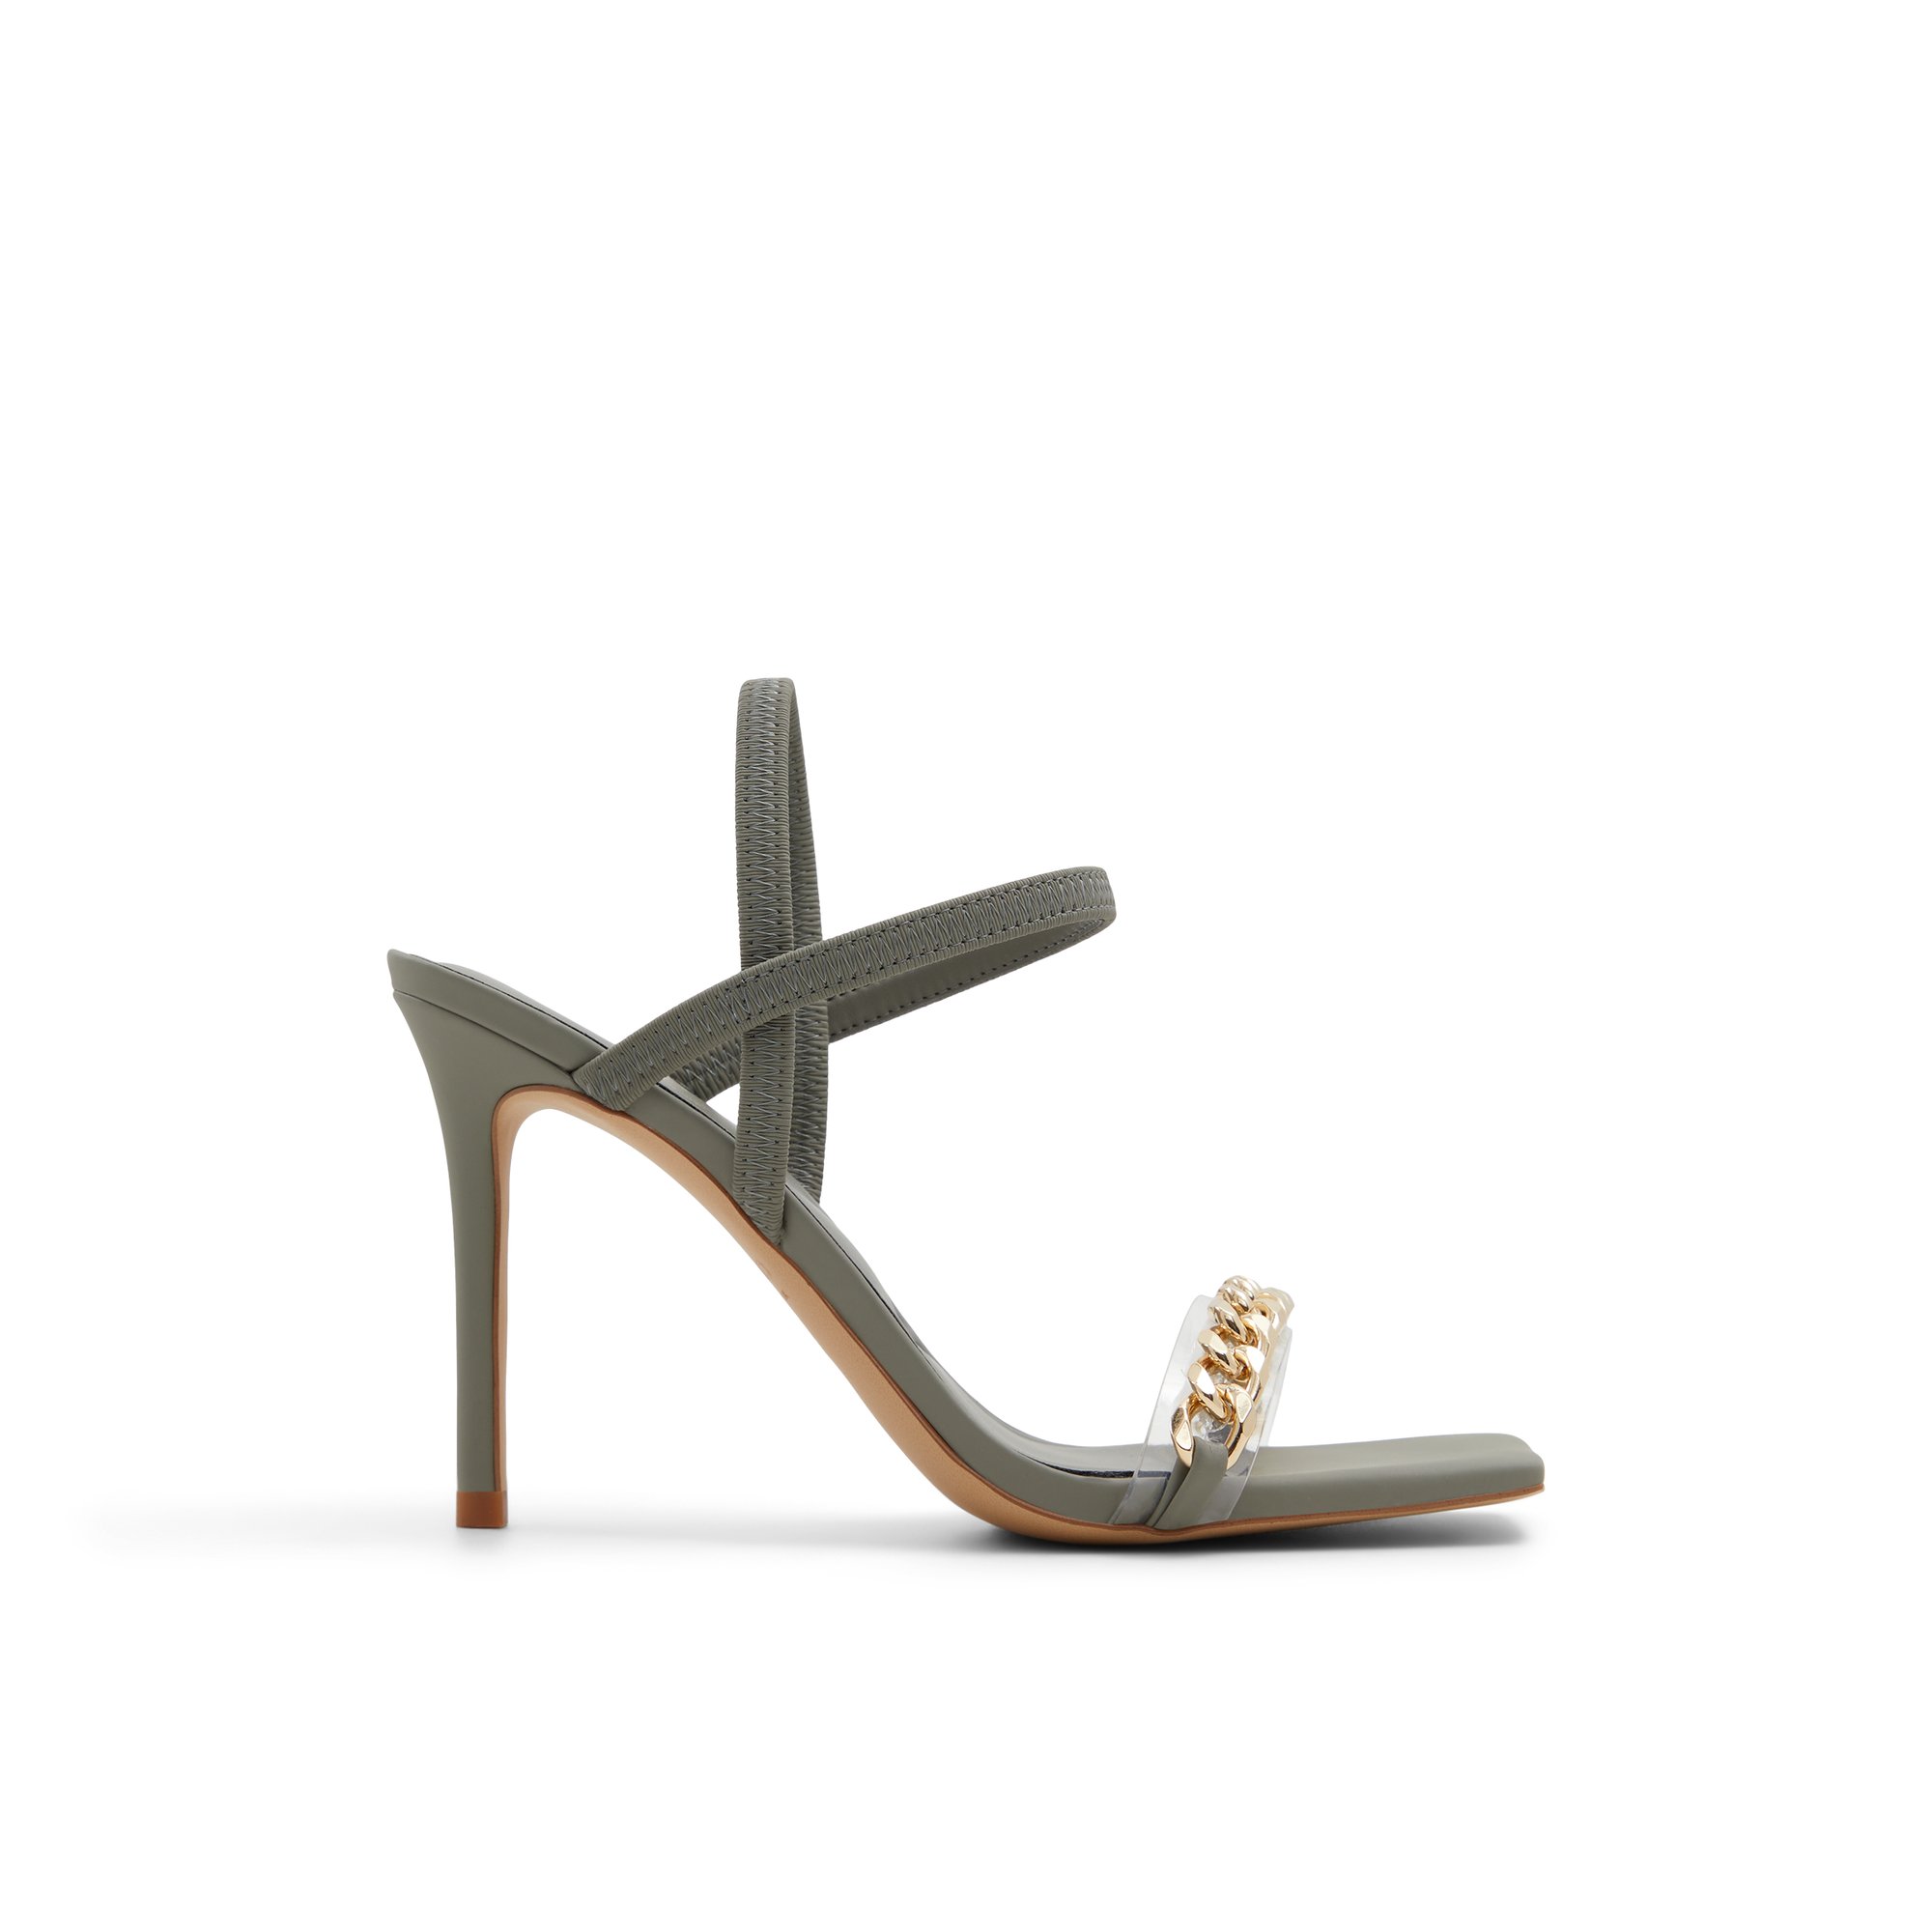 ALDO Ricchezo - Women's Strappy Sandal Sandals - Green